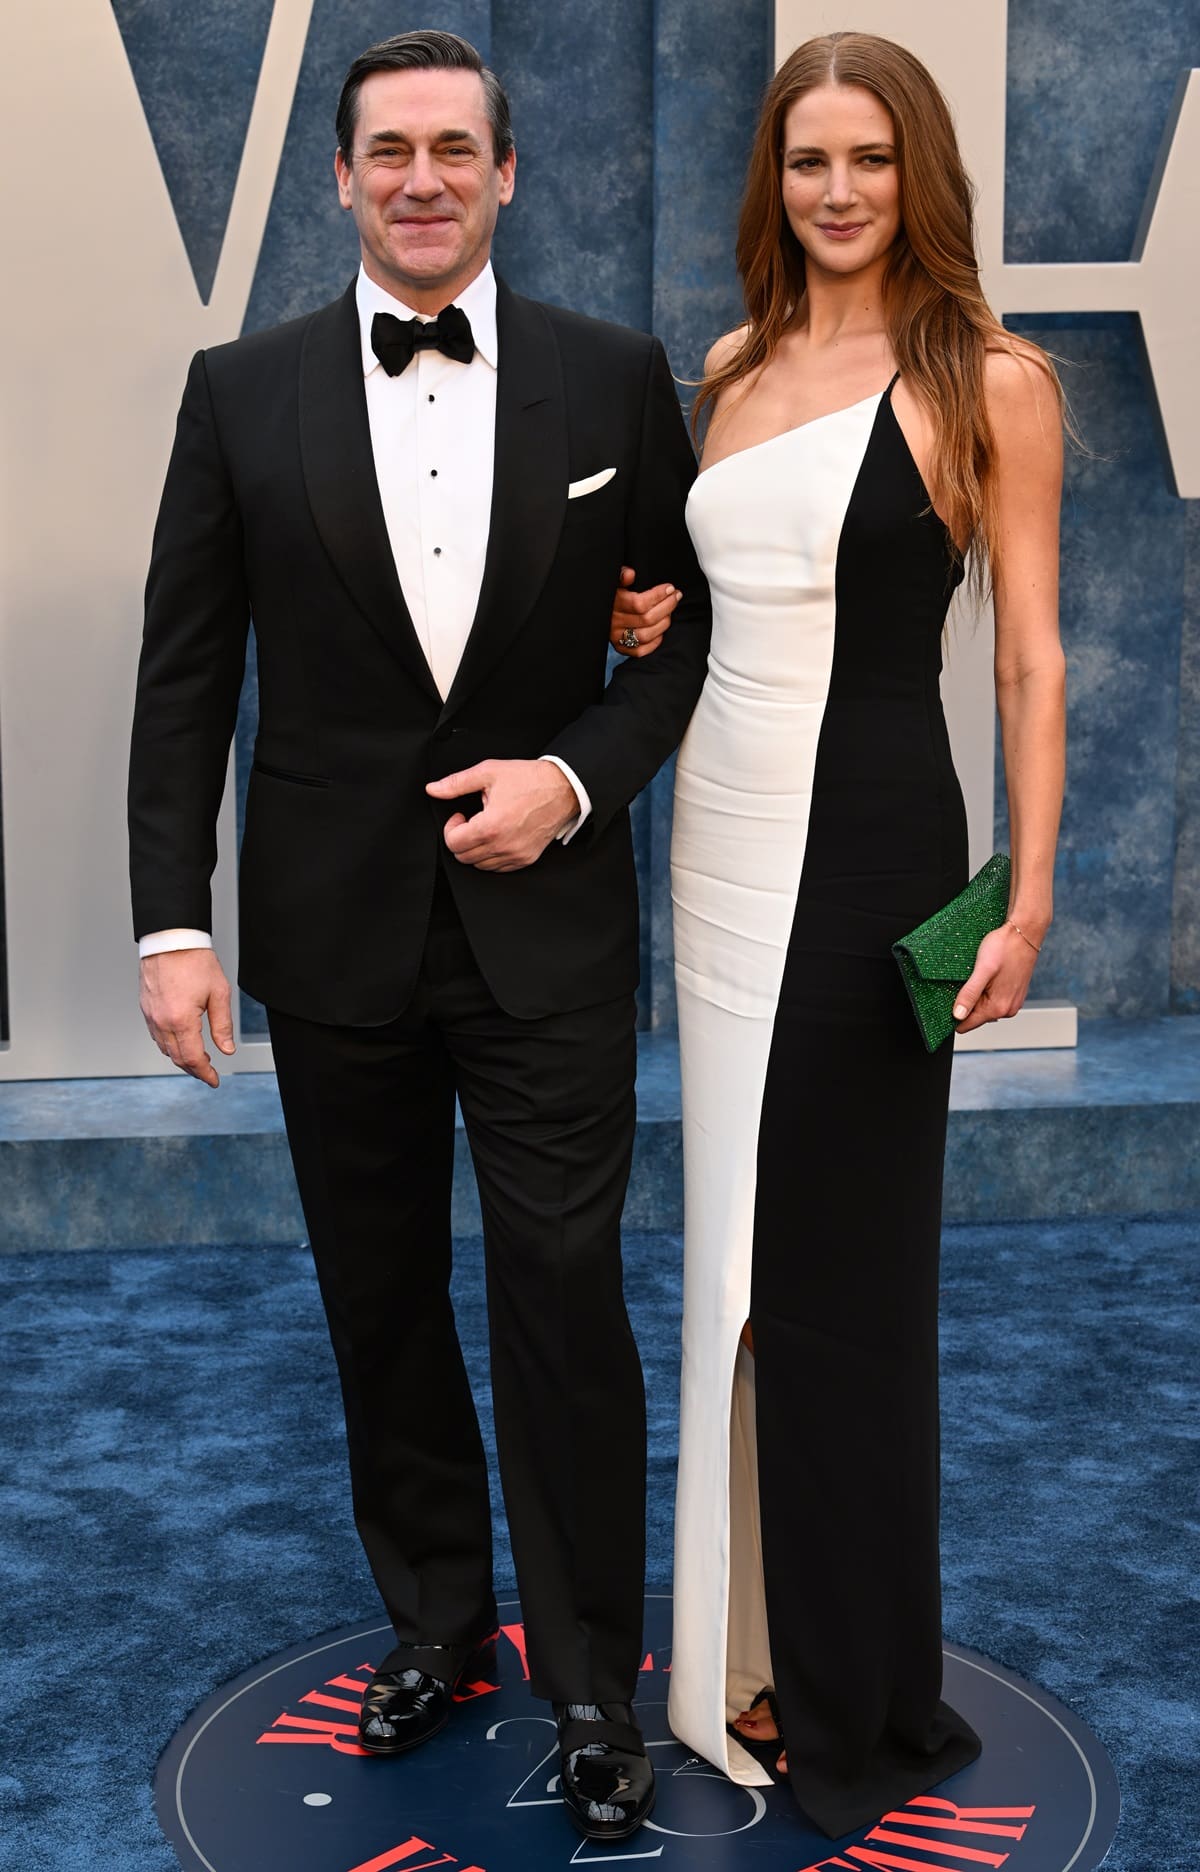 John Hamm and Anna Osceola made a stylish appearance on the red carpet at the Vanity Fair Oscar Party